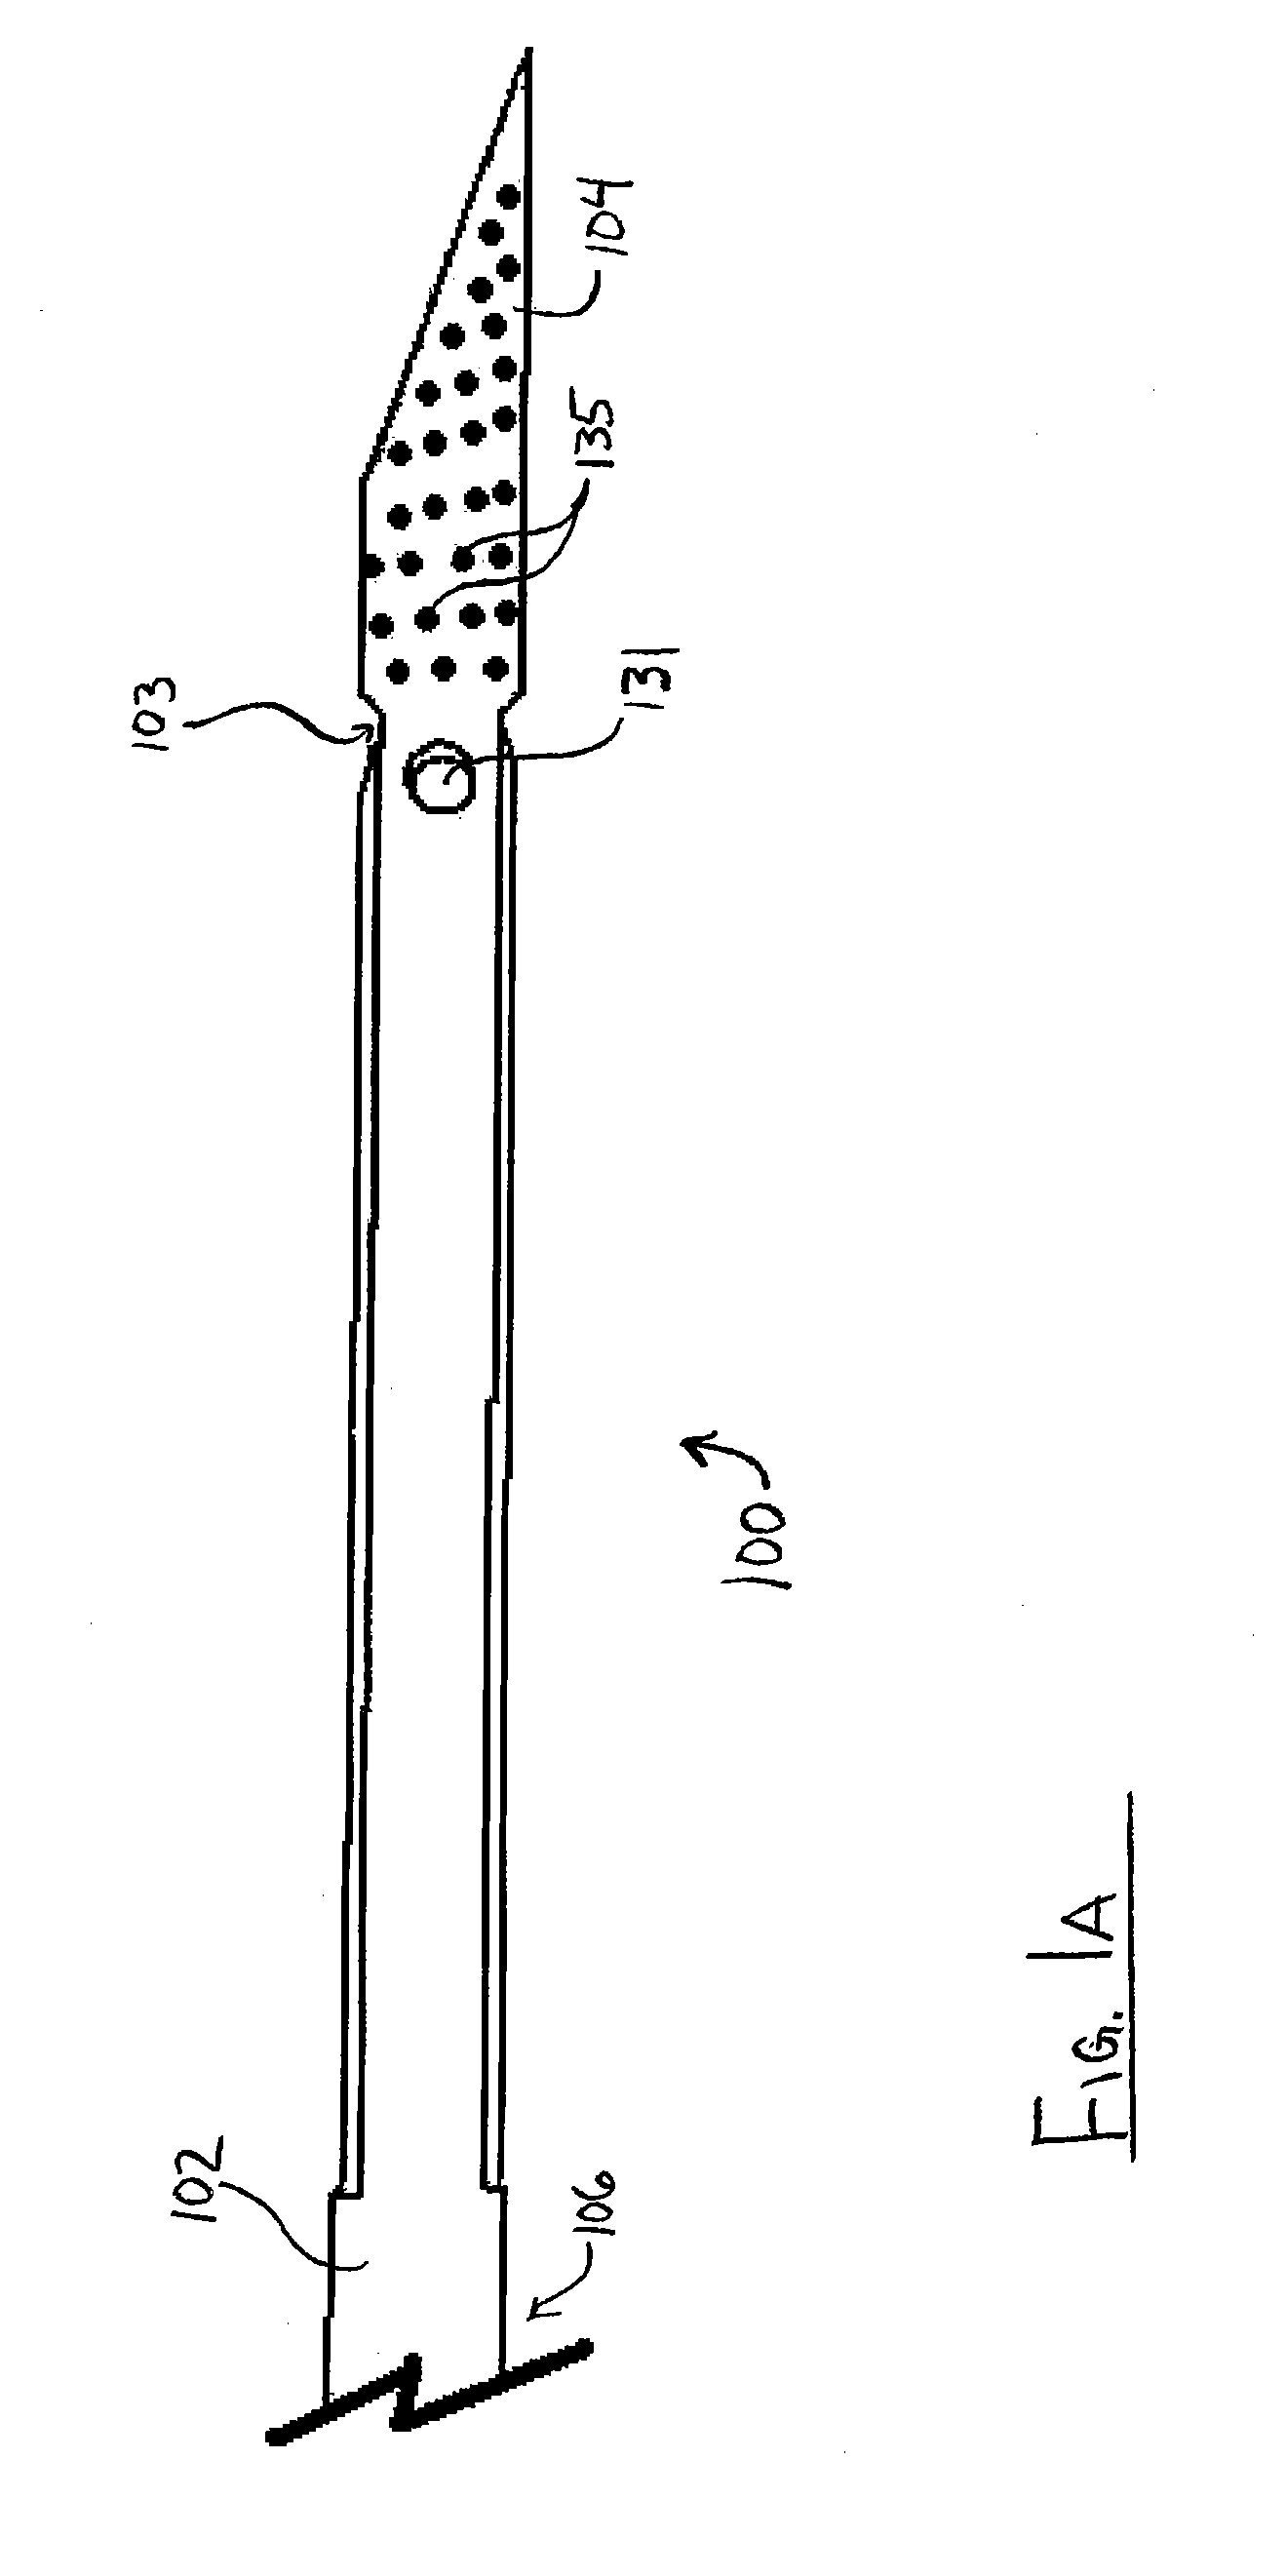 Medical anchor device